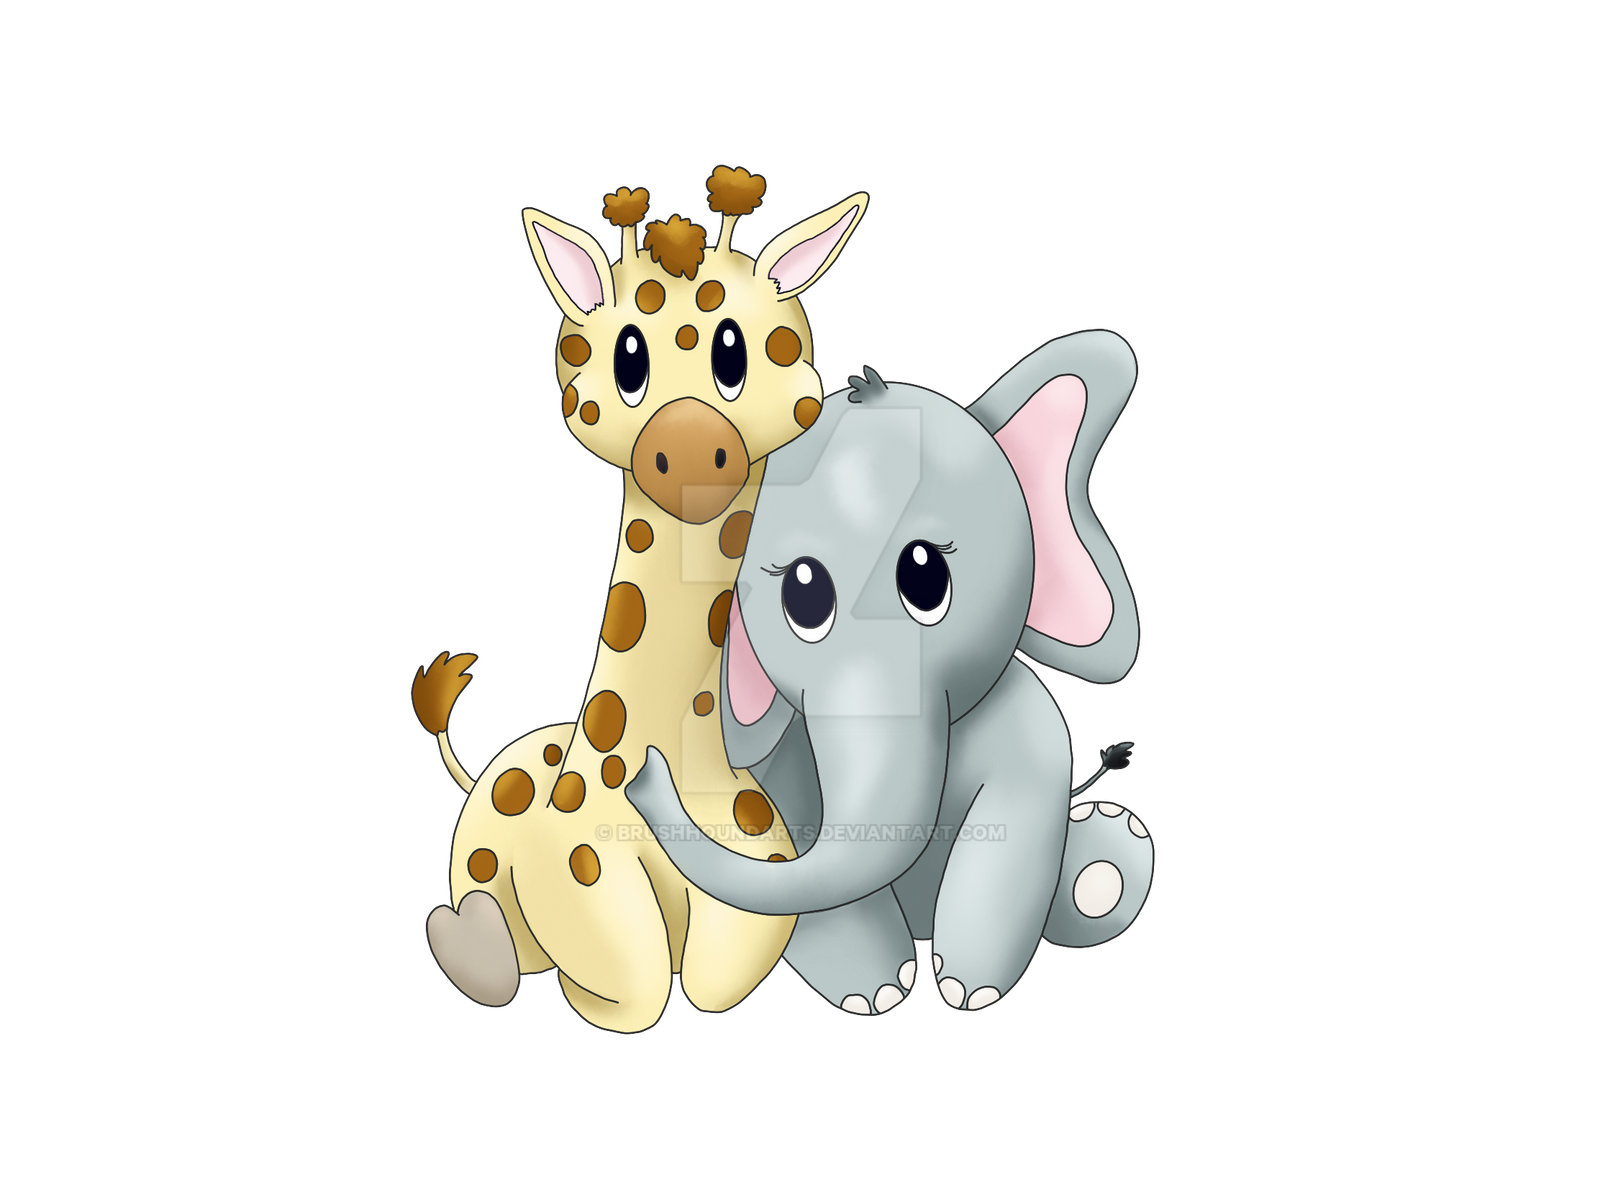 Baby Animals - Giraffe and Elephant by BrushHoundArts on DeviantArt